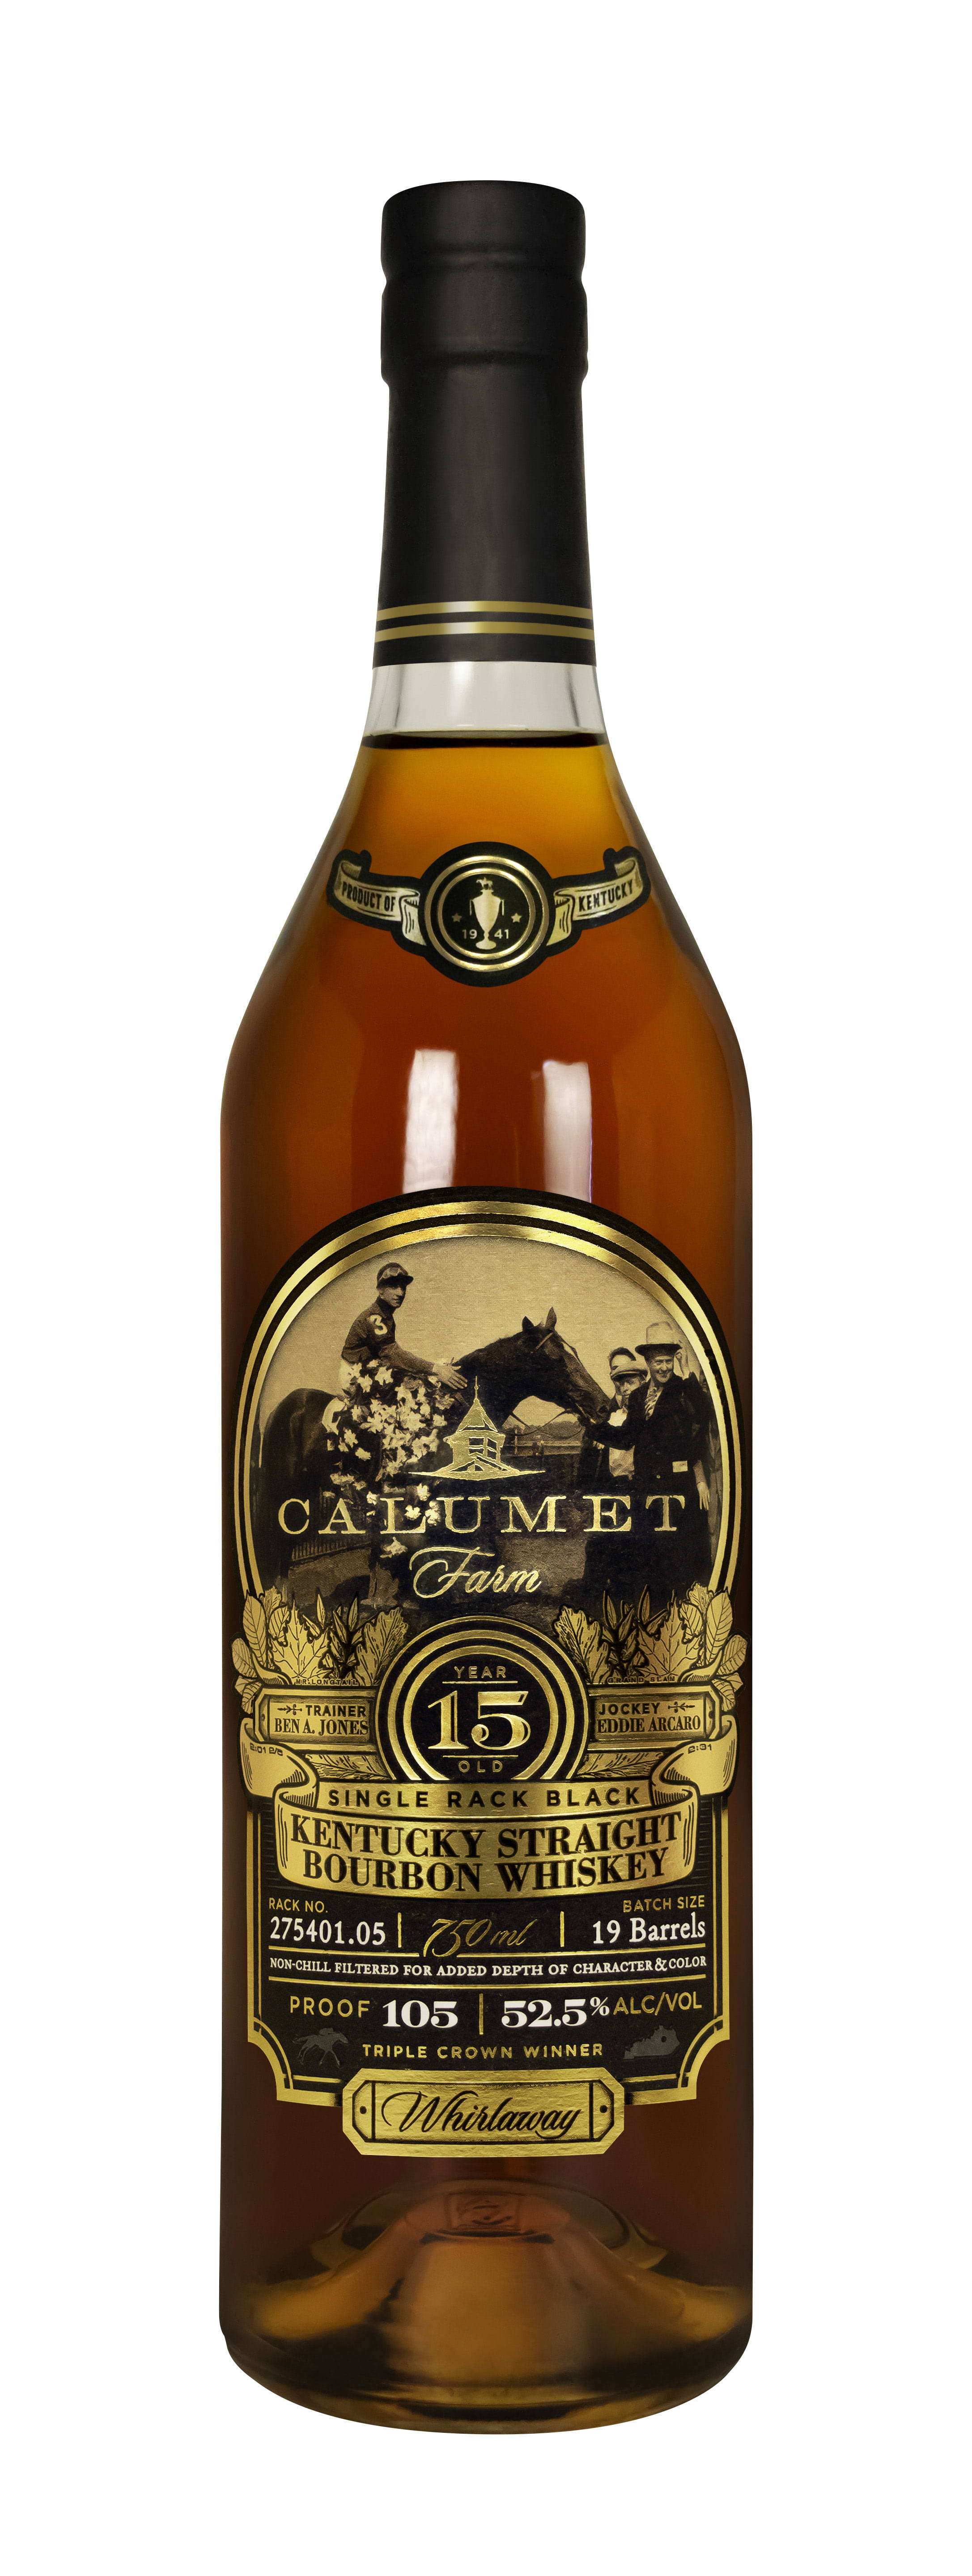 Calumet Farm 15 Year Old Single Rack Black Bourbon 750ml Bottle